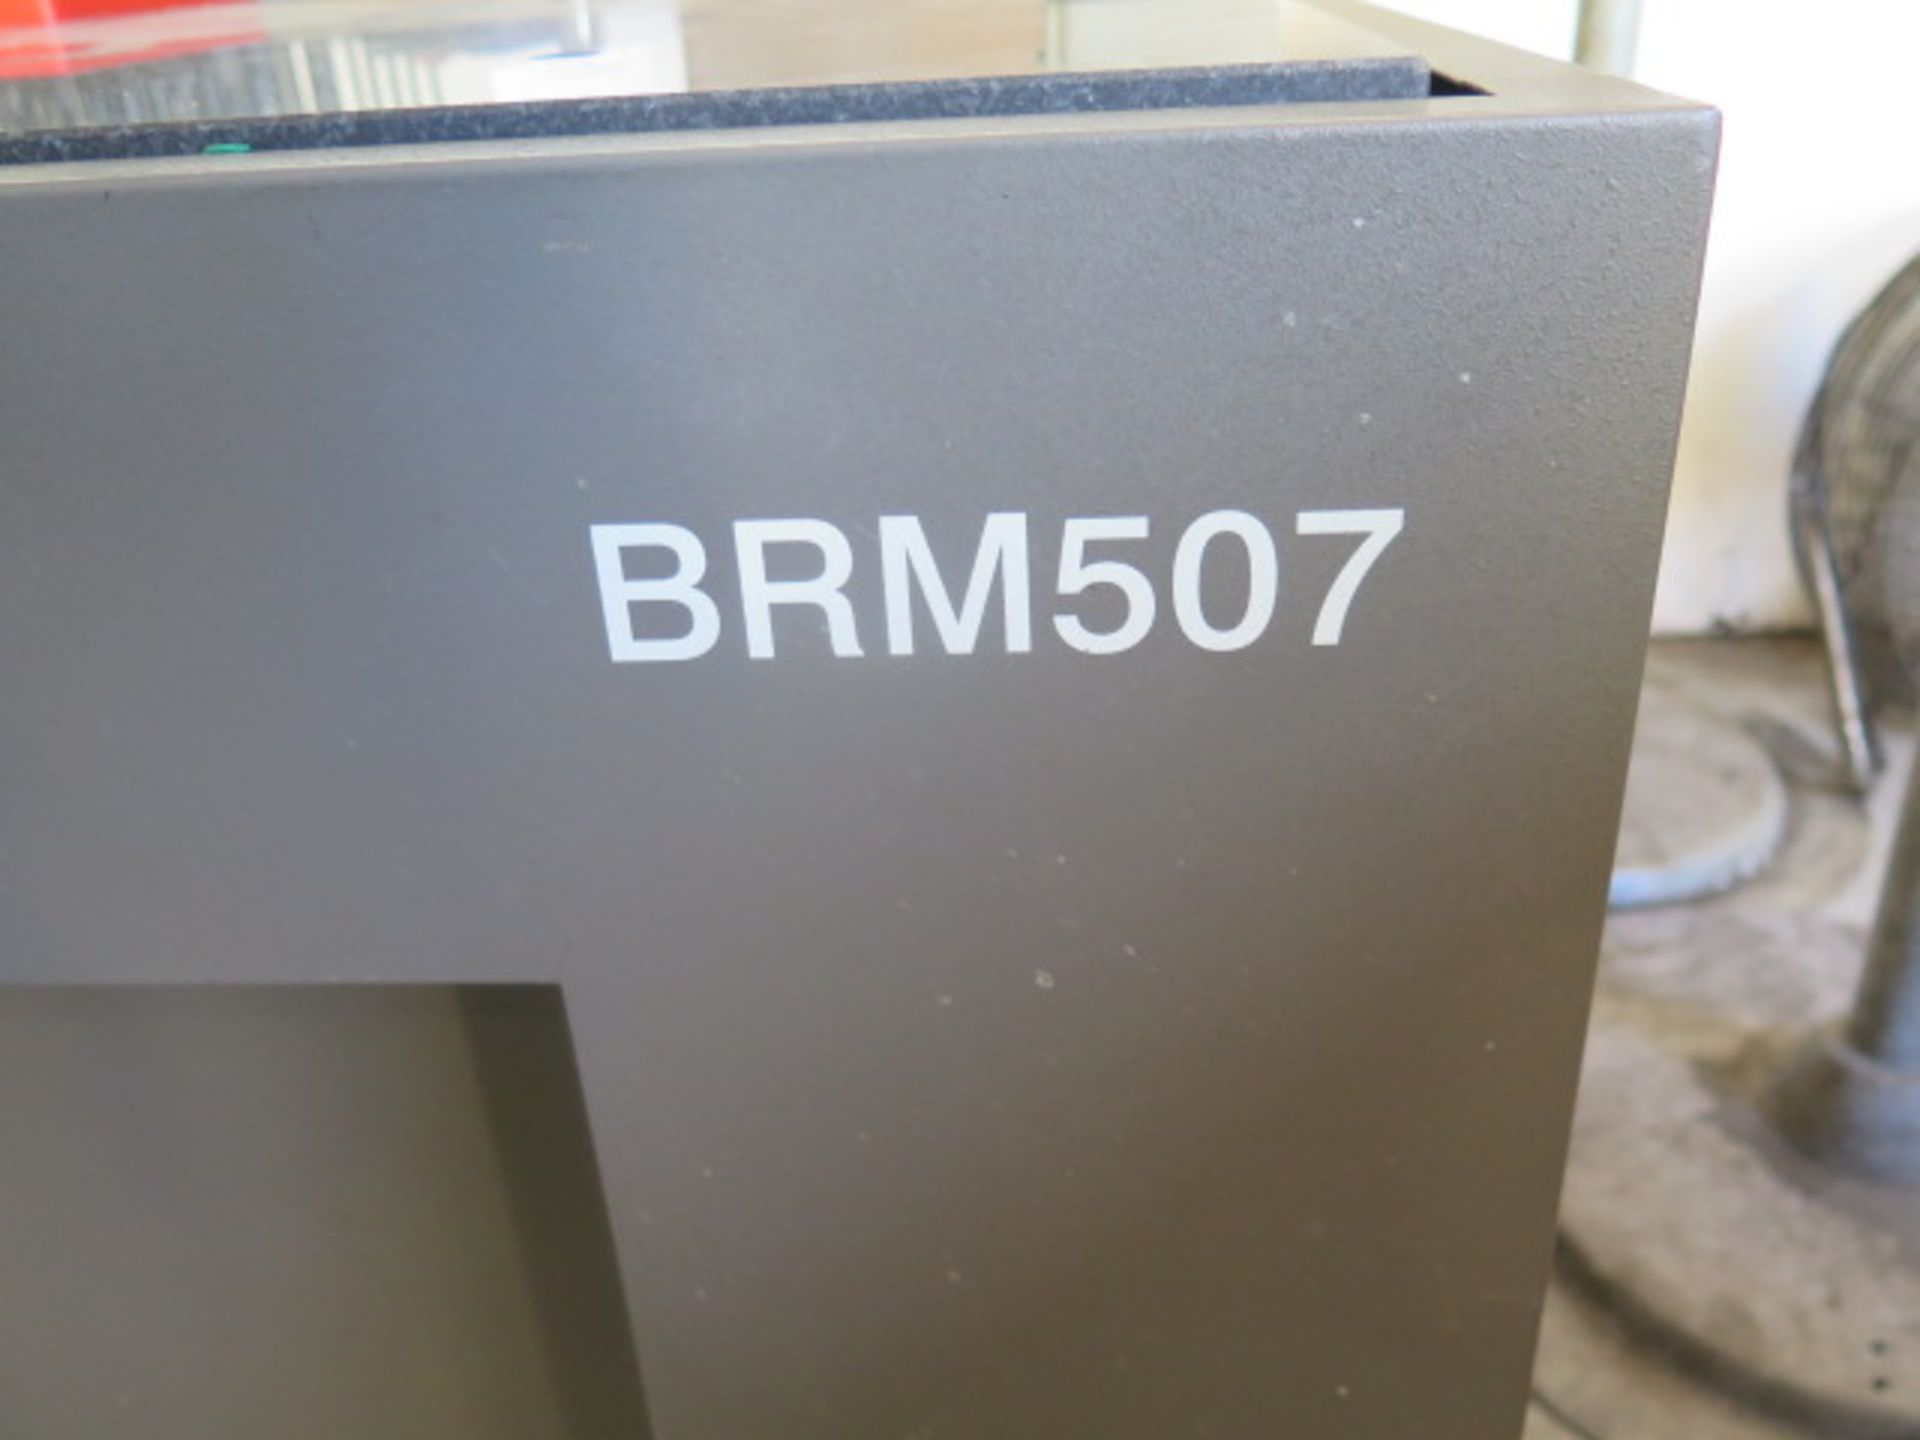 Mitutoyo “Bright-M” BRM507 CMM Machine s/n 97060005 w/ Renishaw MIP Probe Head, SOLD AS IS - Image 7 of 16